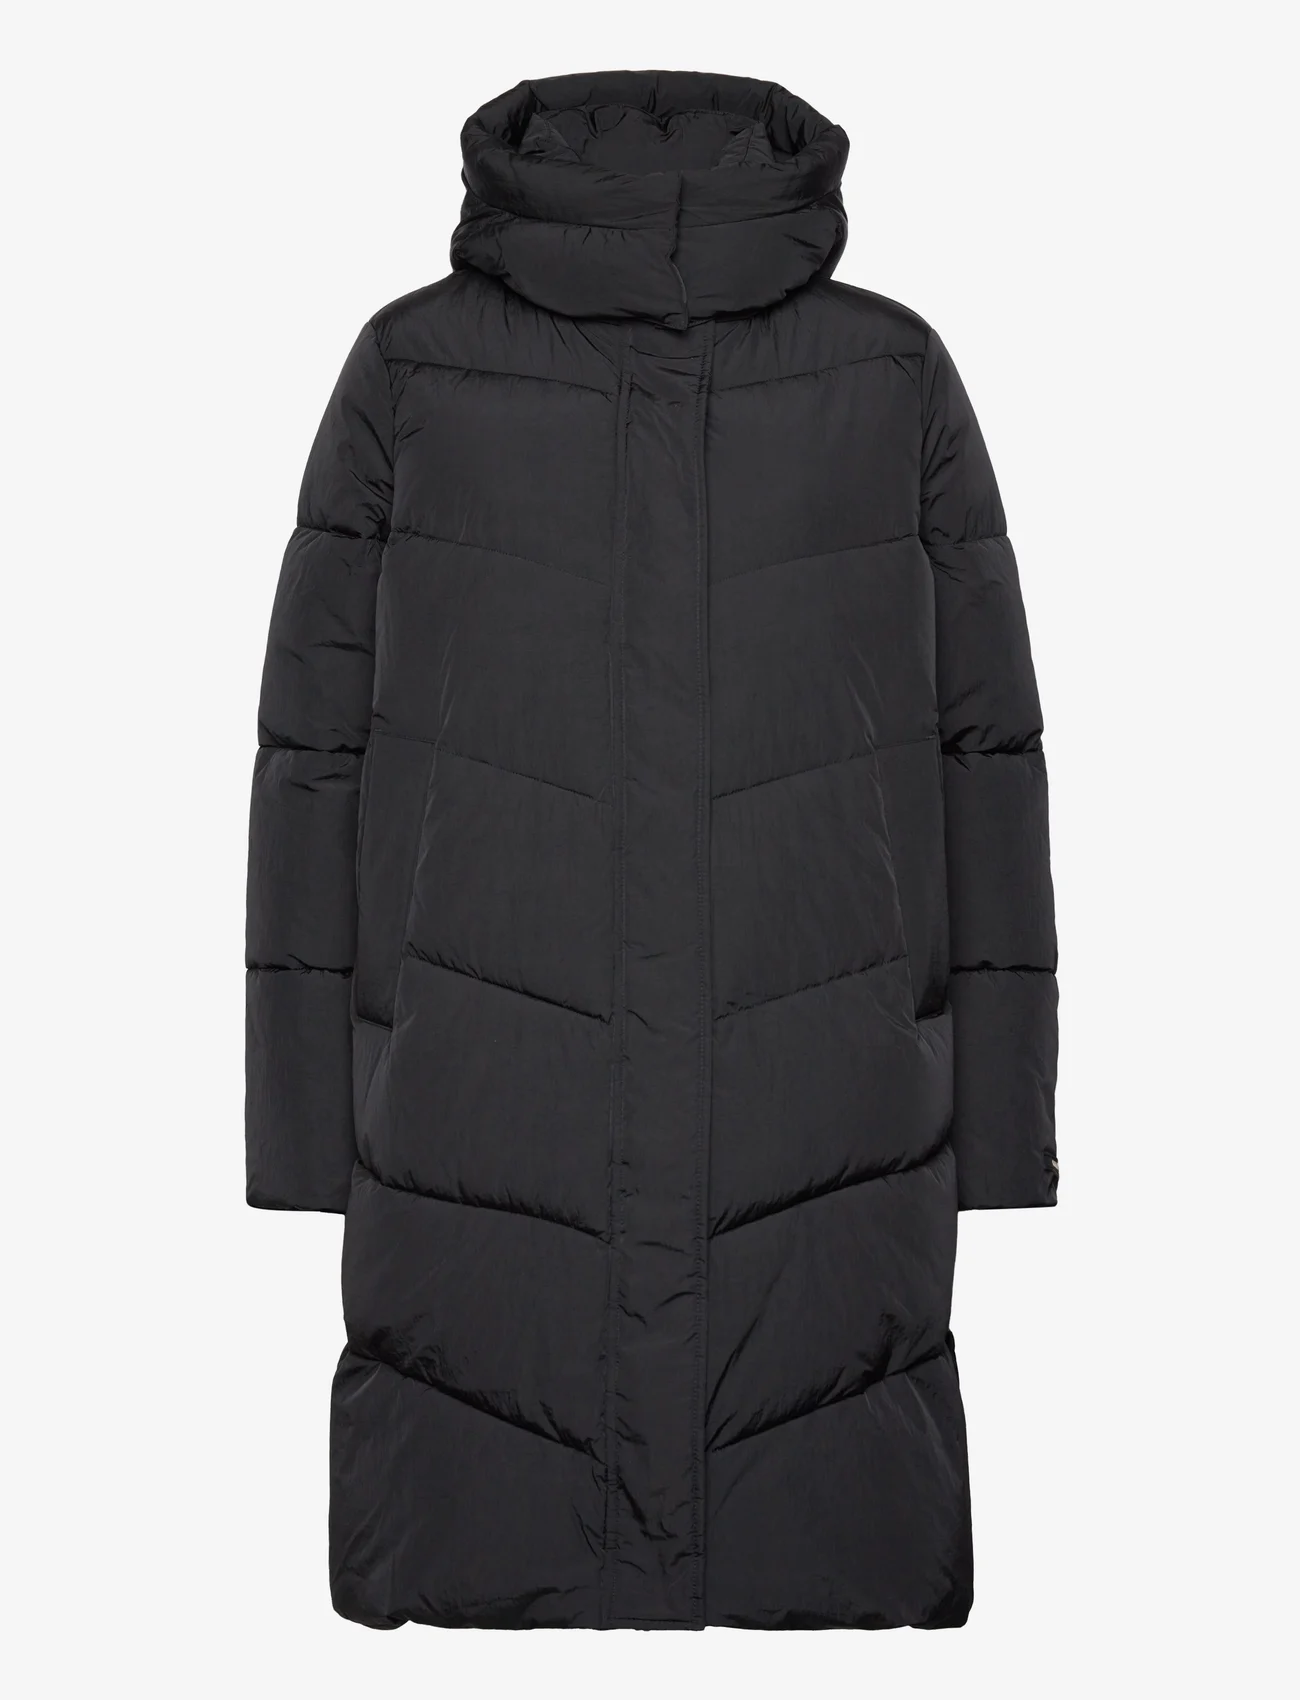 Calvin Klein - MODERN PADDED COAT - winter jackets - ck black - 0